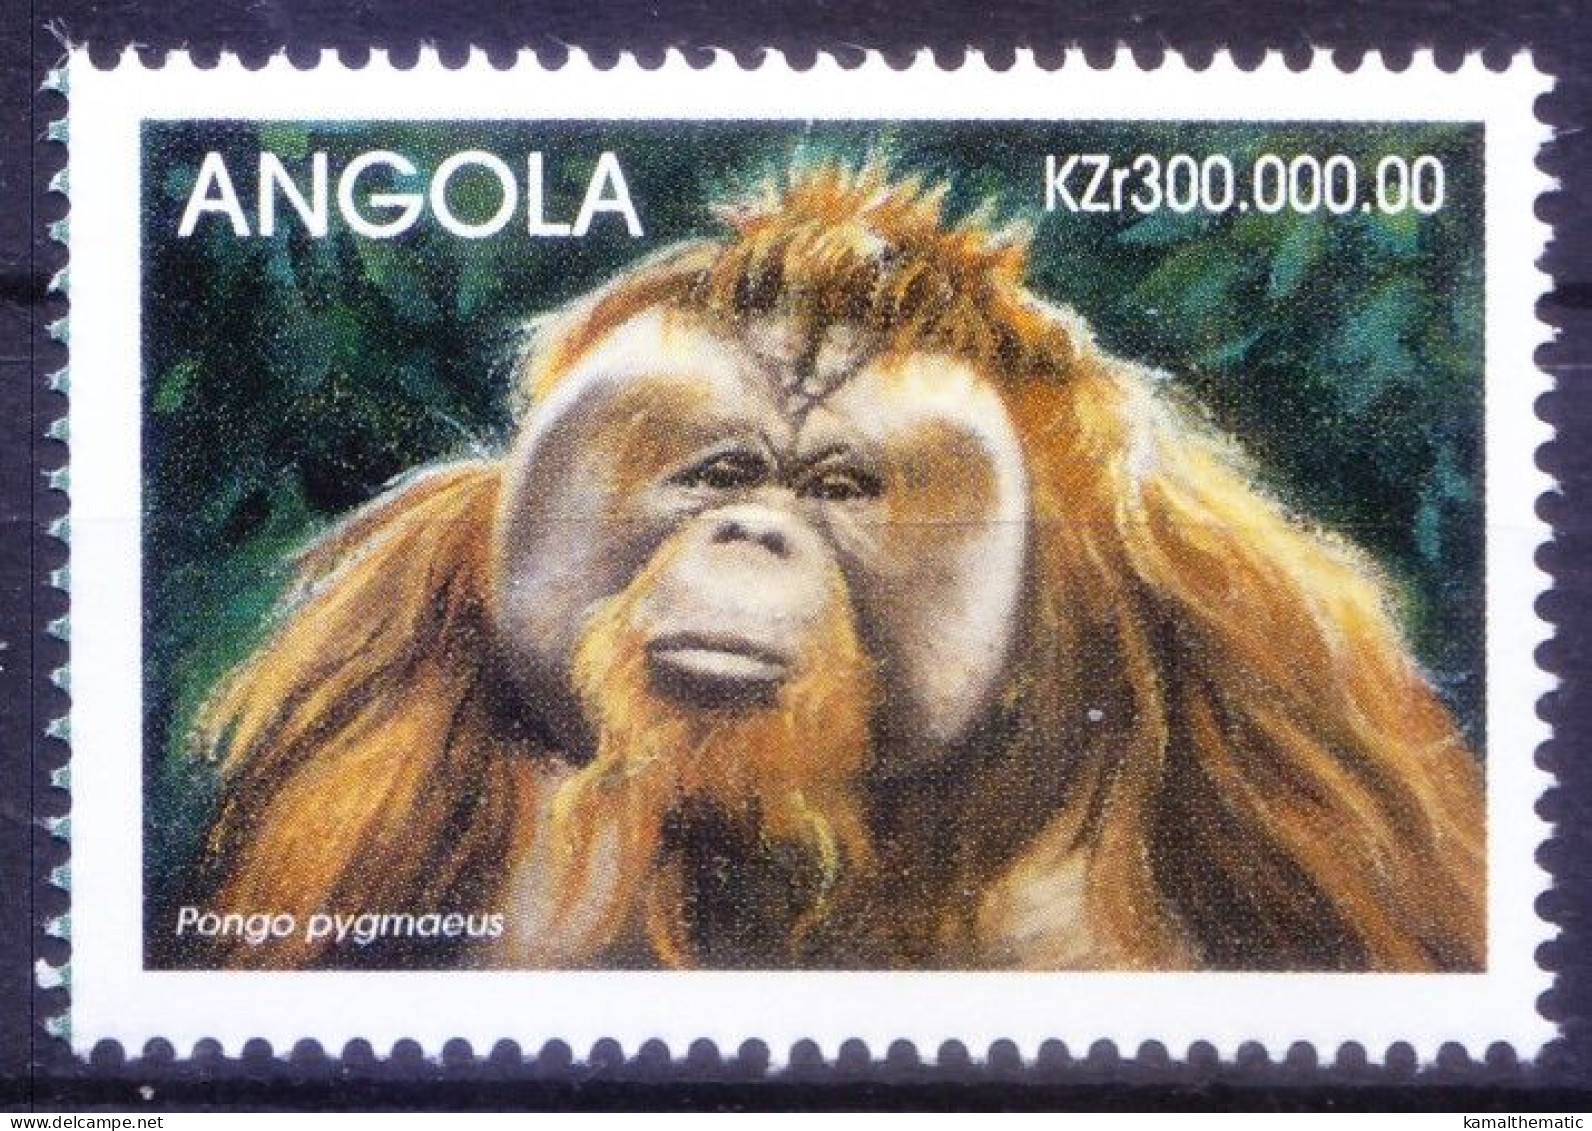 Angola 1999 MNH, Bornean Orangutan, Monkeys, Endangered Animals Of The World - Monkeys